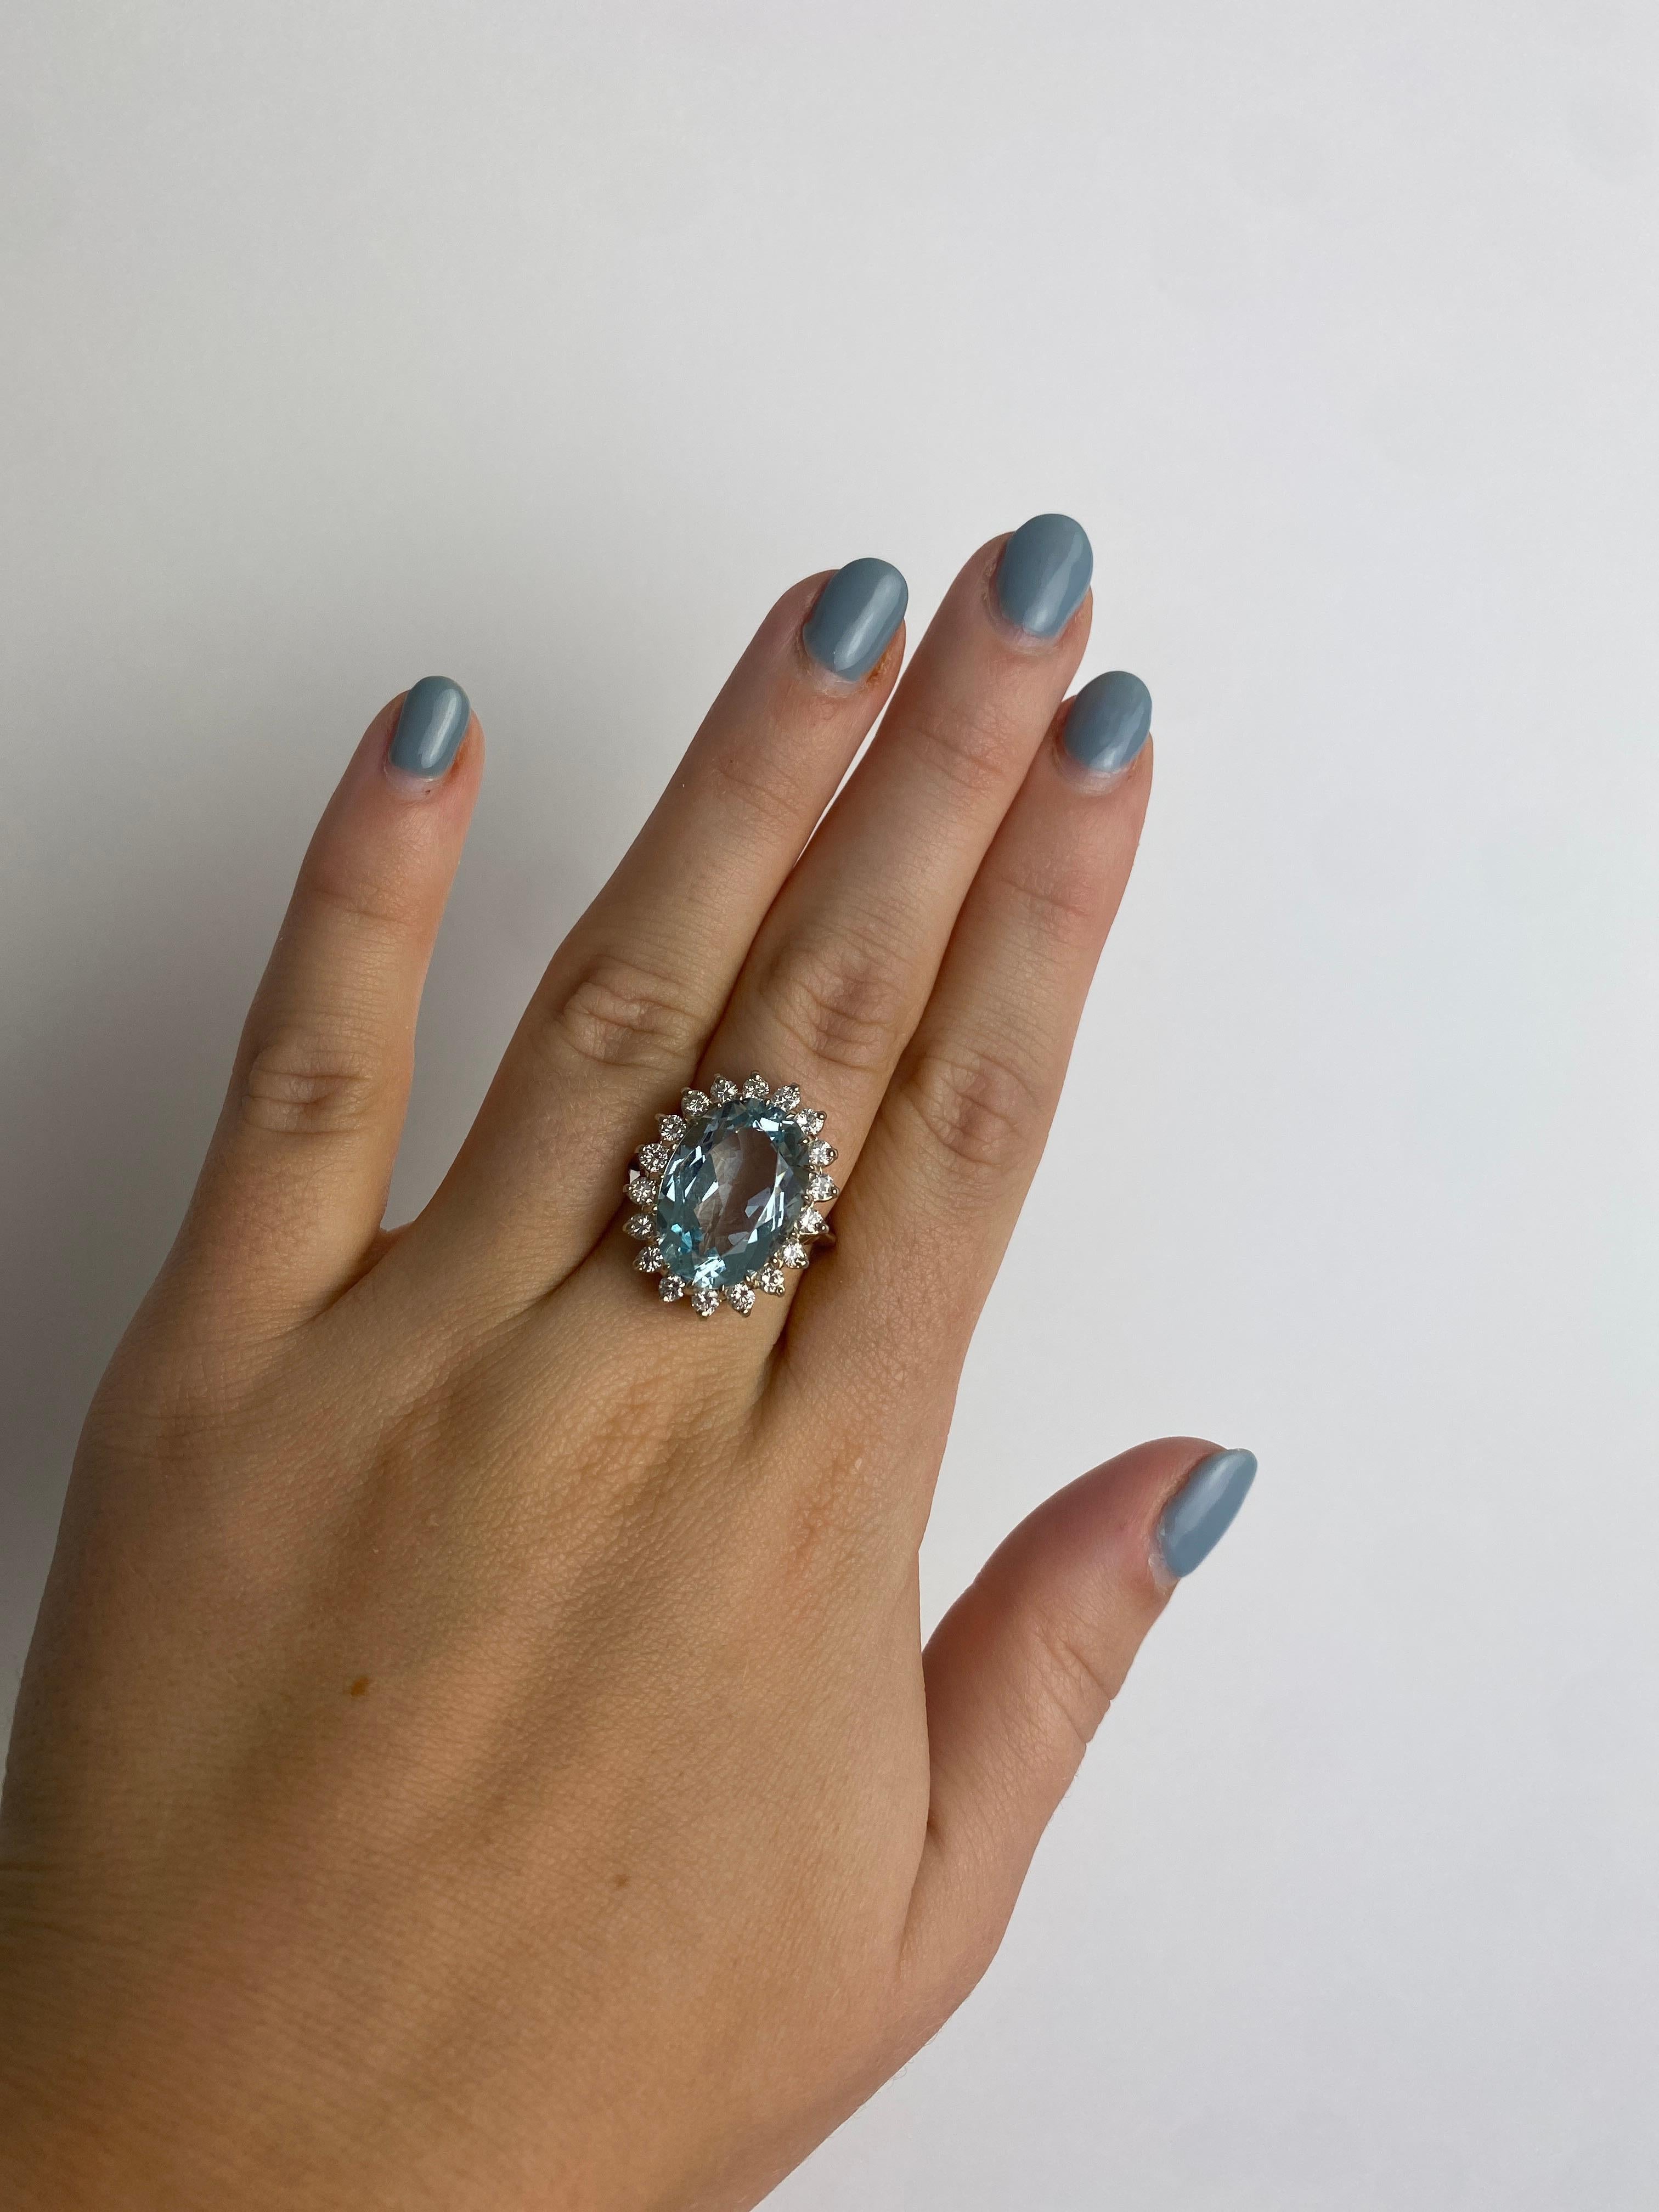 Oval Cut Aquamarine Diamond Ring, Large Aquamarine Ring, Oval Aquamarine Ring For Sale